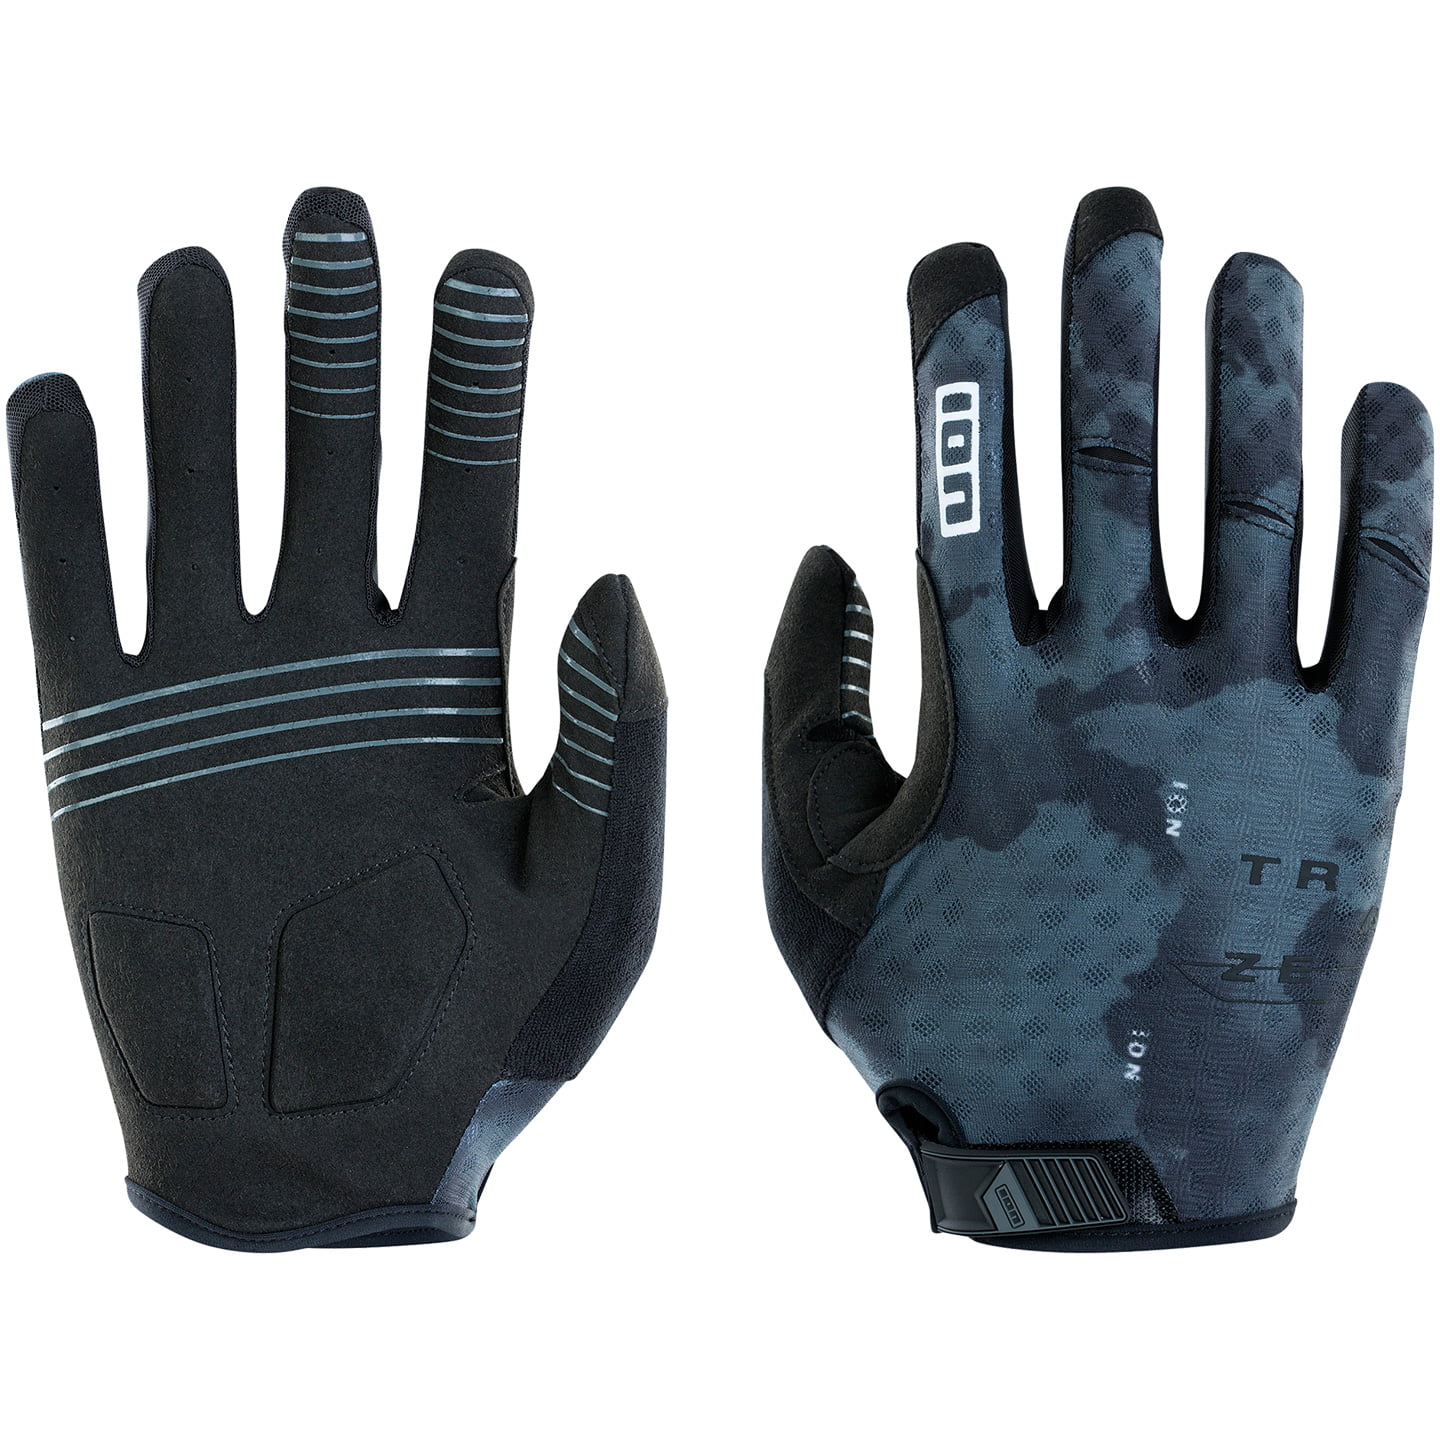 ION Traze Full Finger Gloves Cycling Gloves, for men, size M, Cycling gloves, Cycling gear